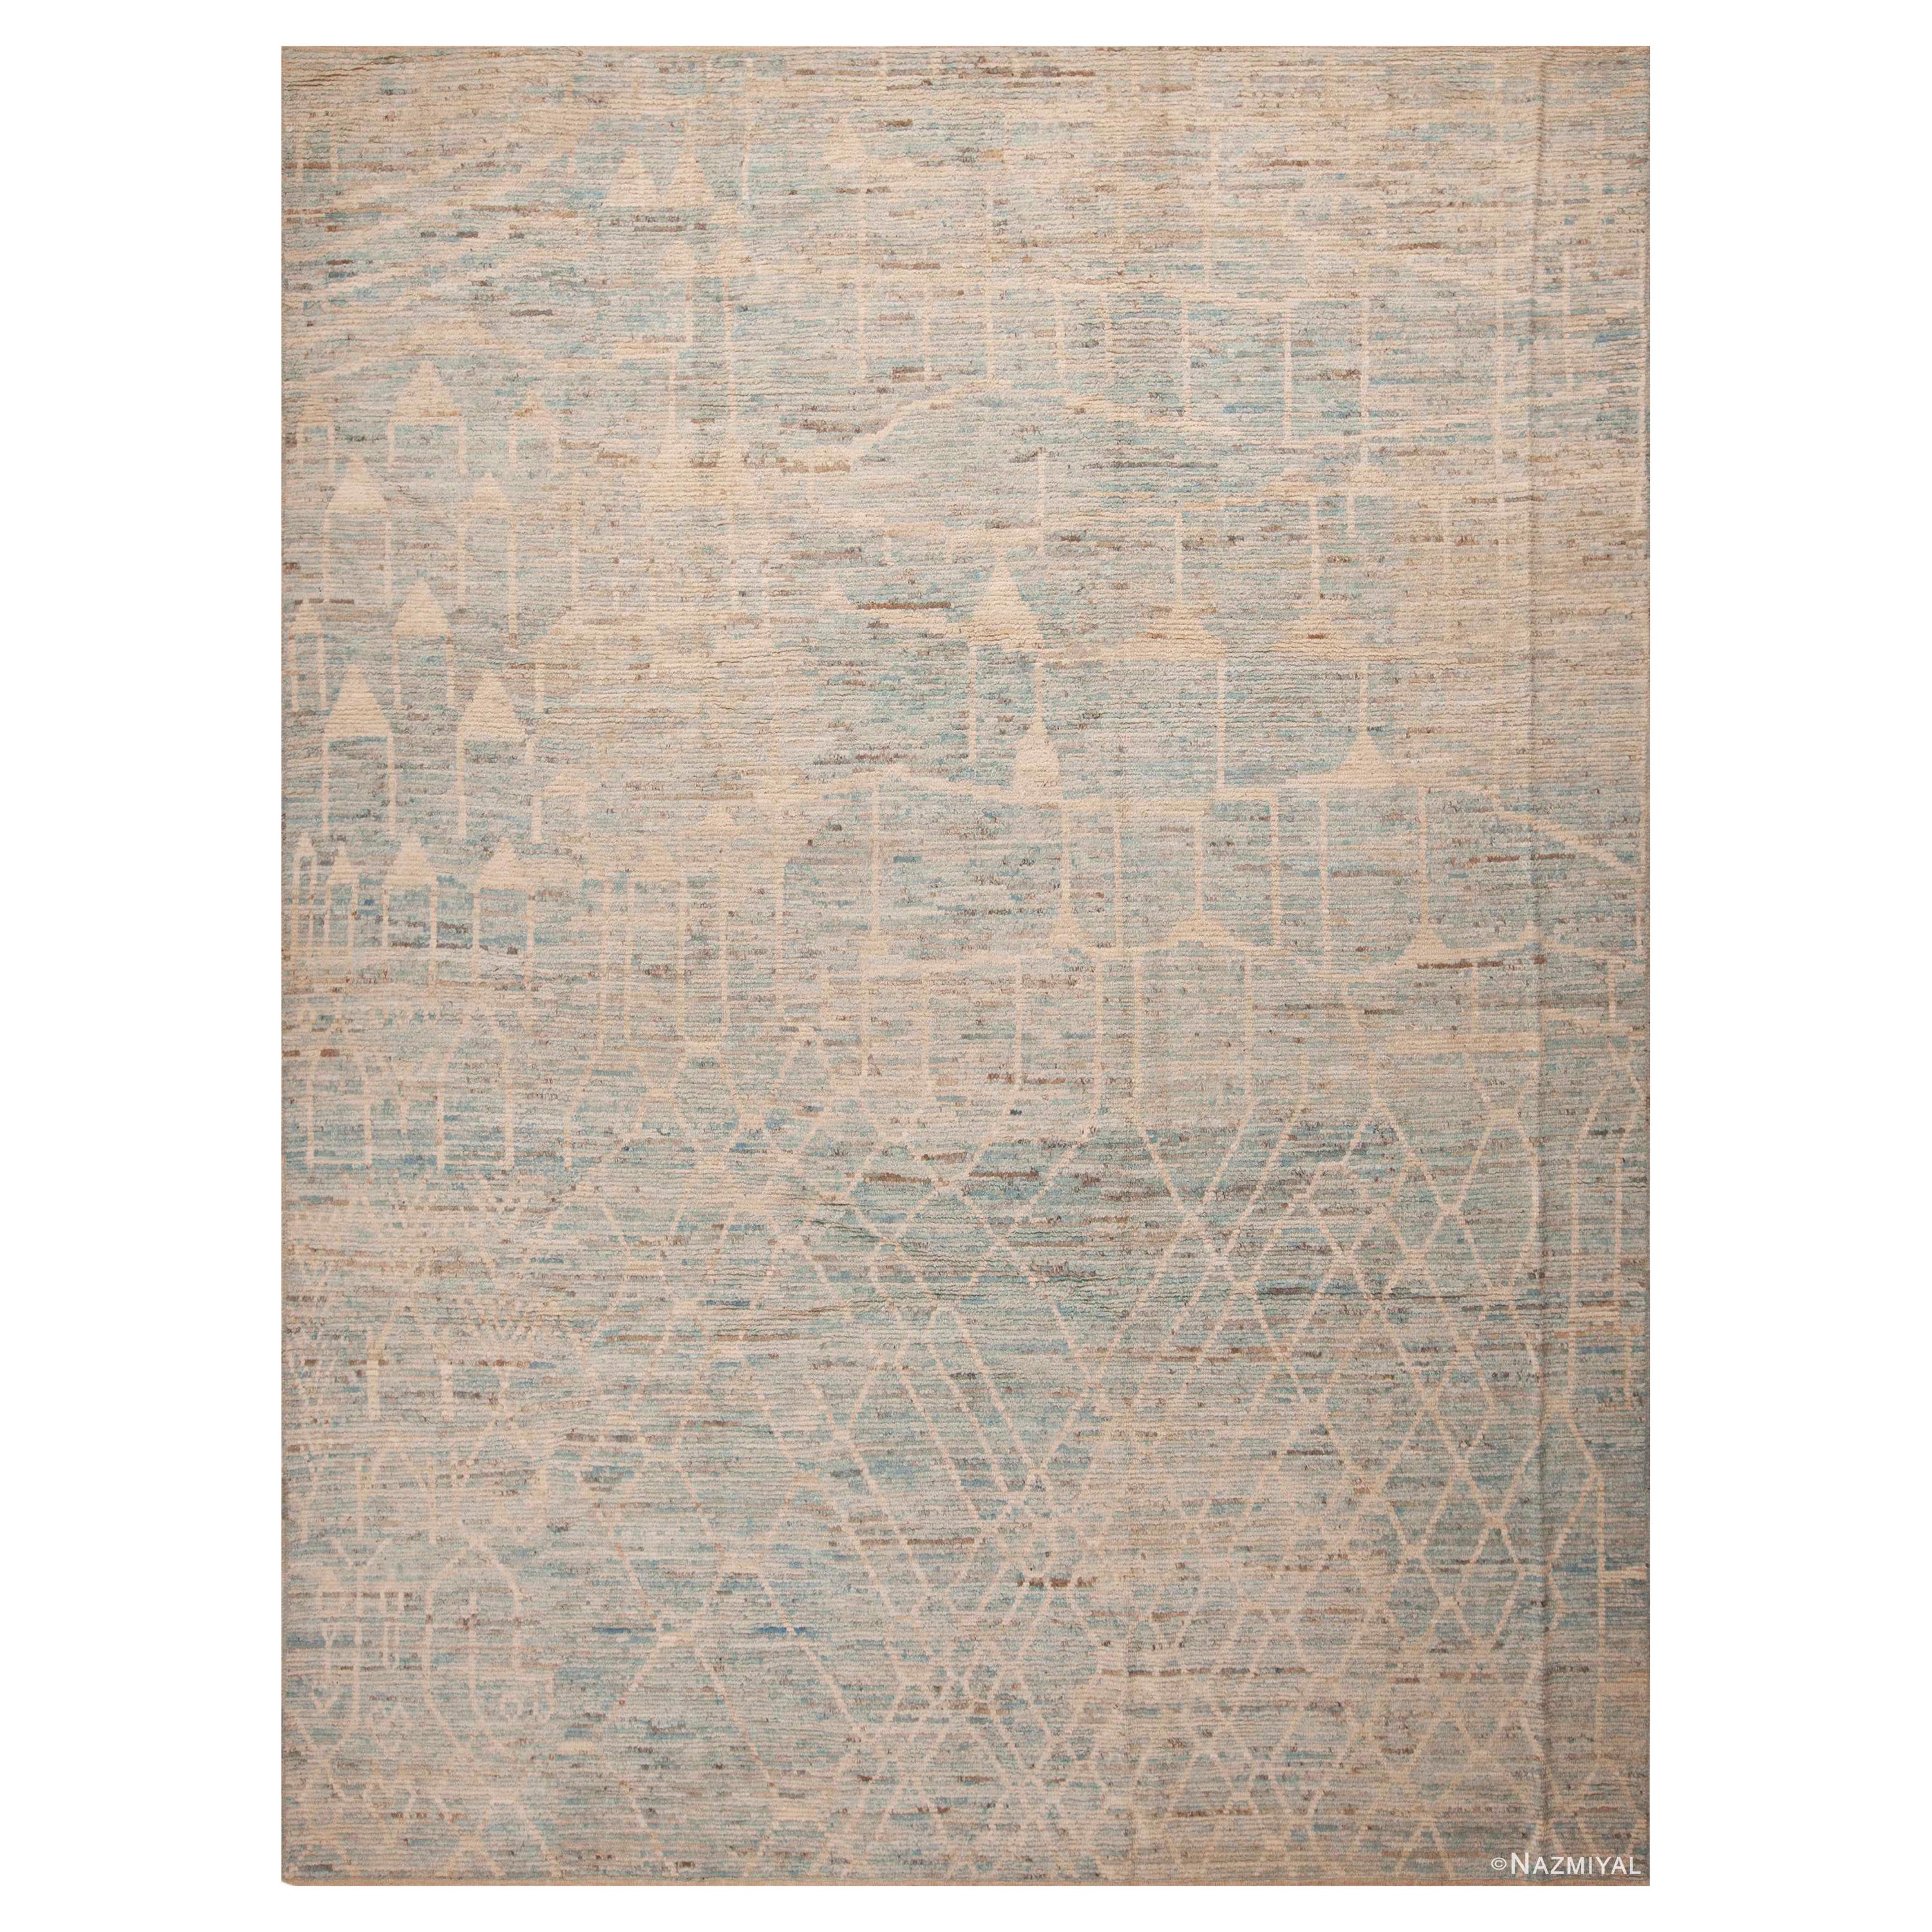 Nazmiyal Collection Decorative Modern Tribal Geometric Rug 10'6" x 13'10" For Sale